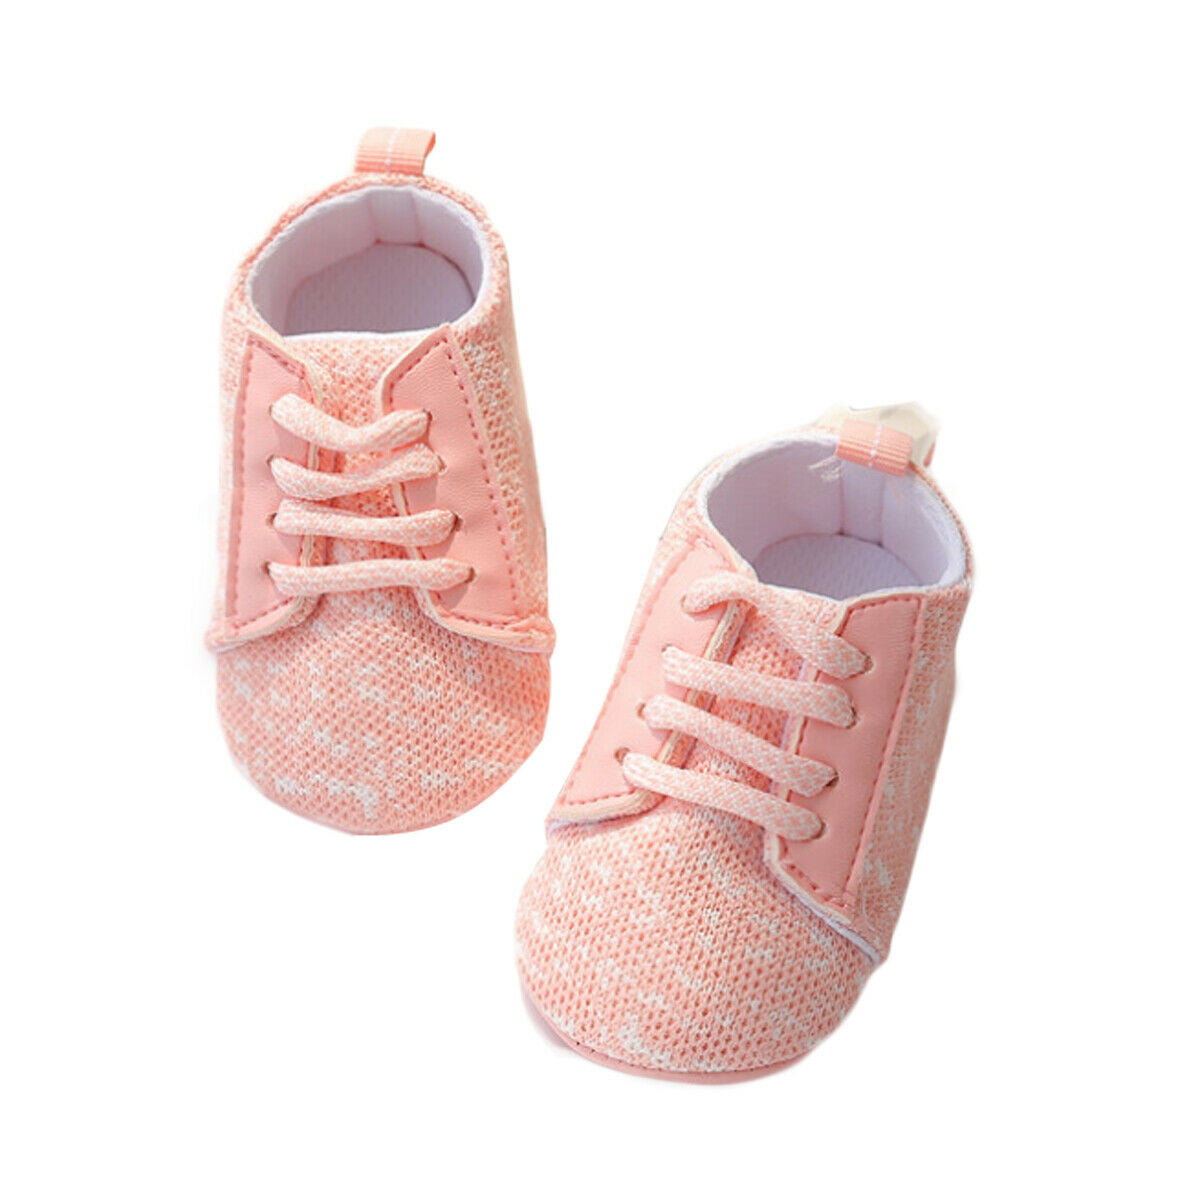 infant shoes at walmart